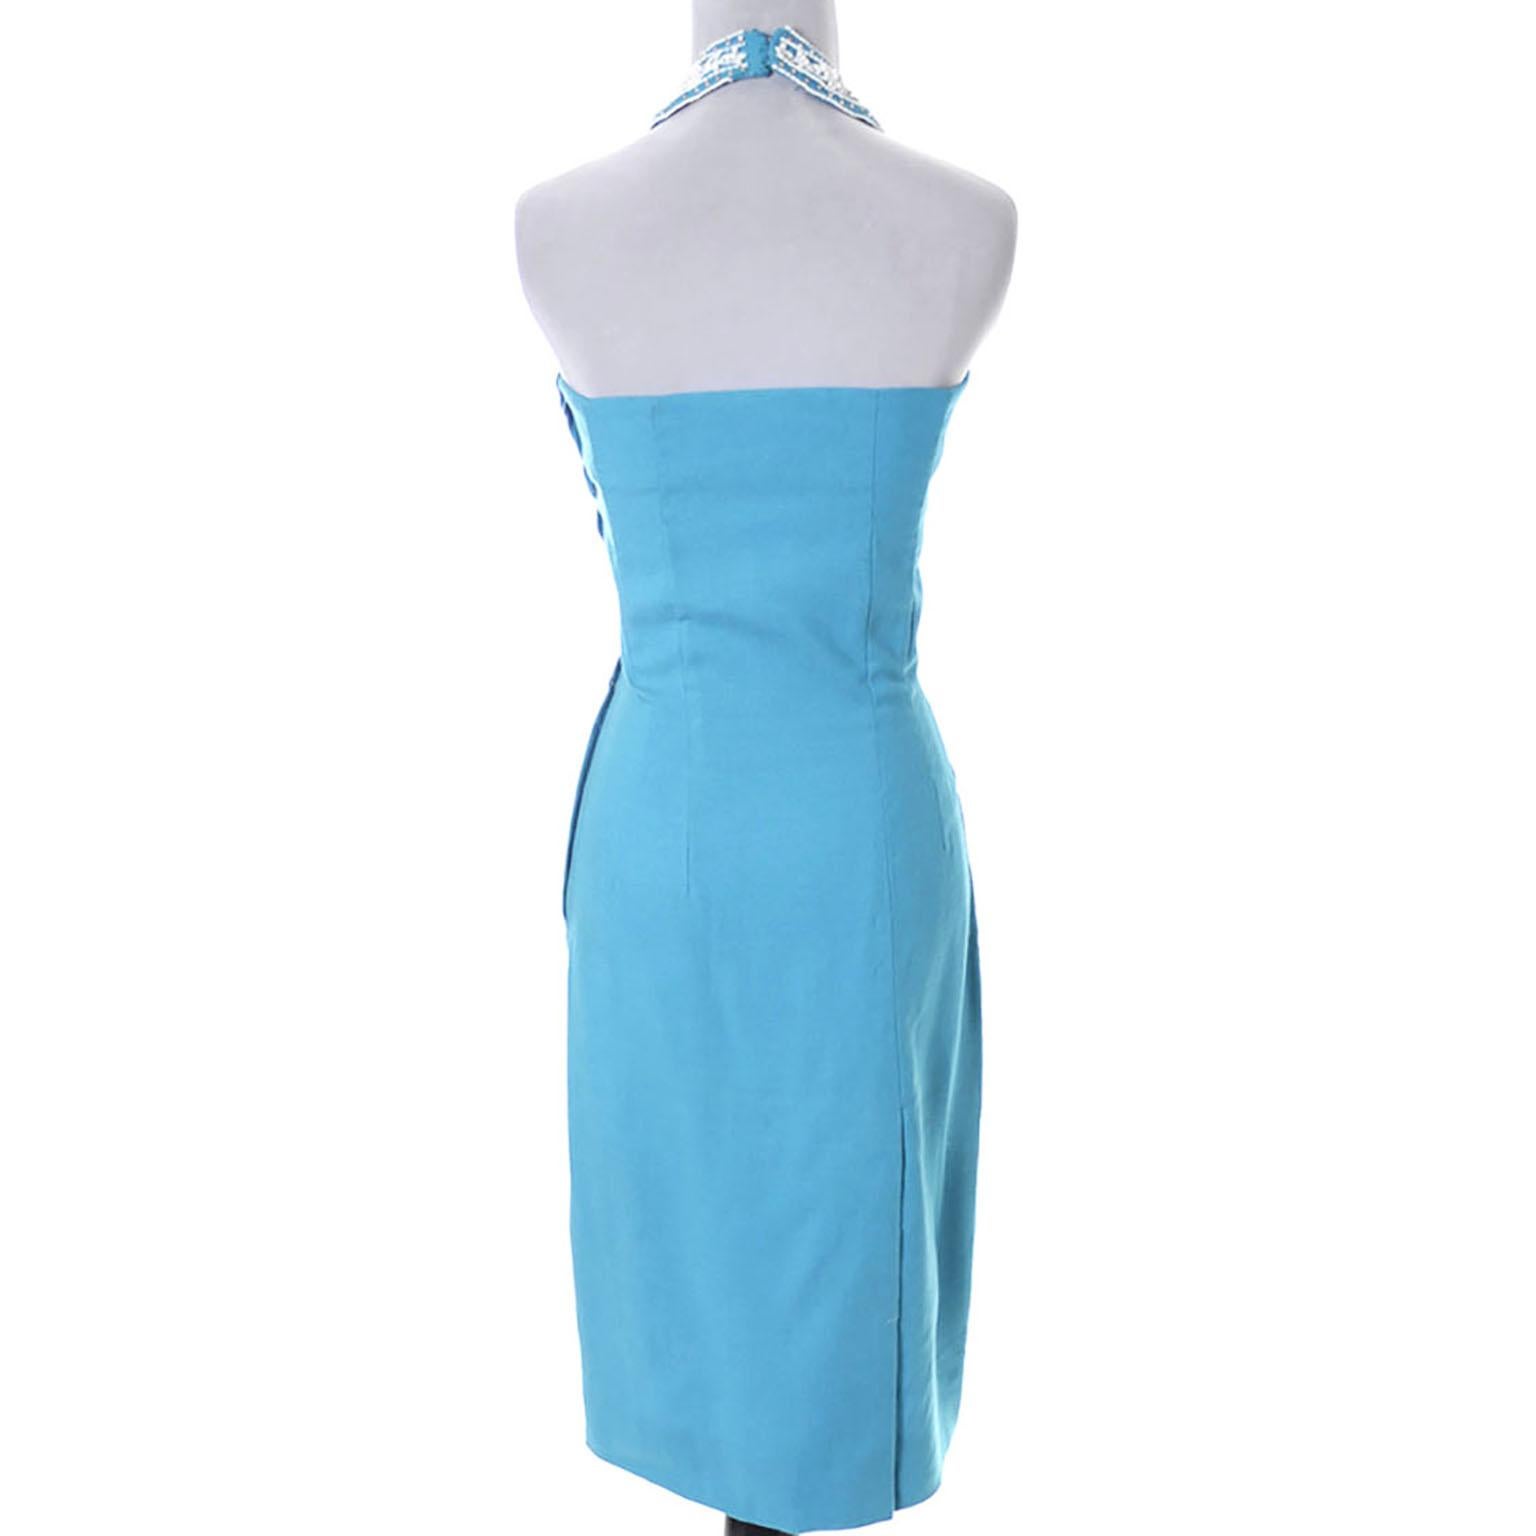 1960s halter dress